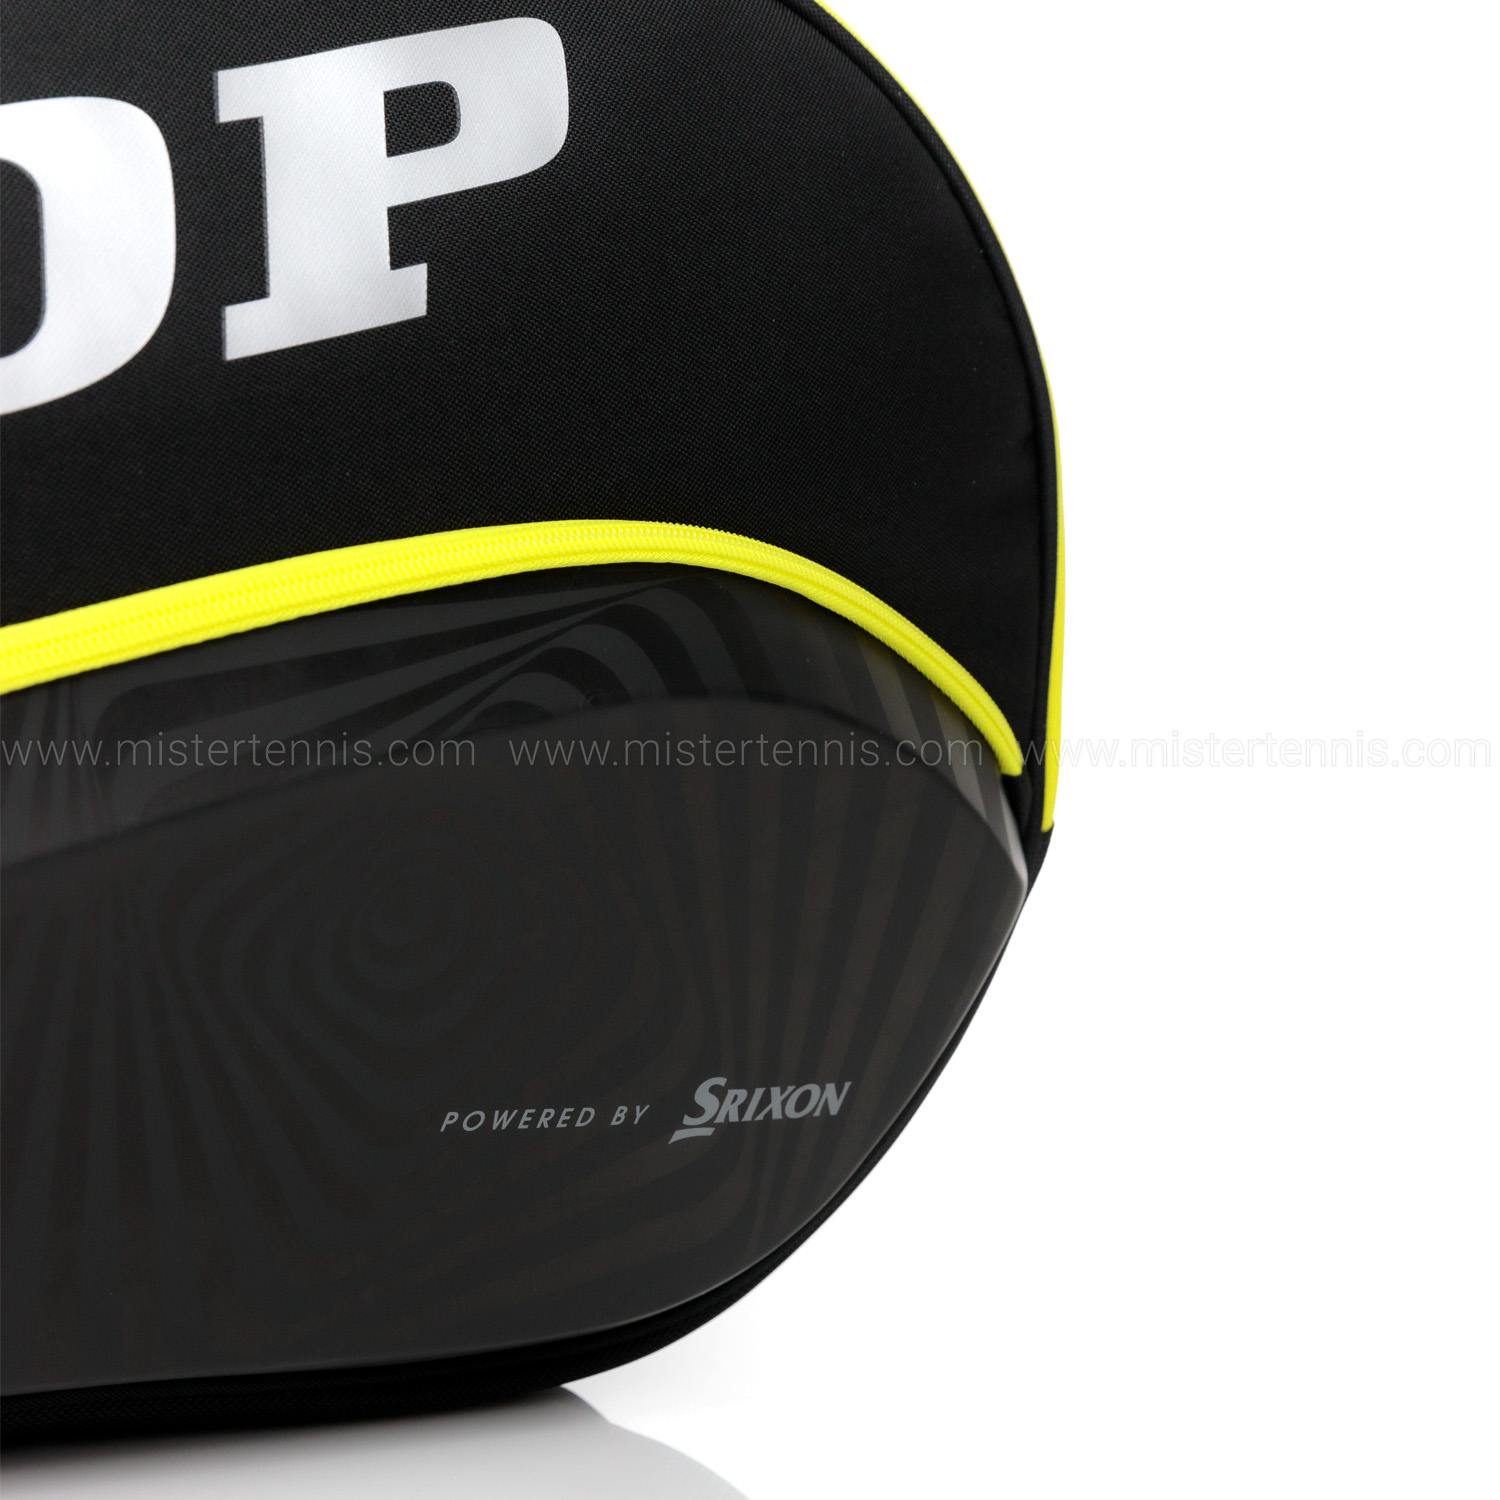 Dunlop SX Performance x 12 Thermo Bolsas - Black/Yellow